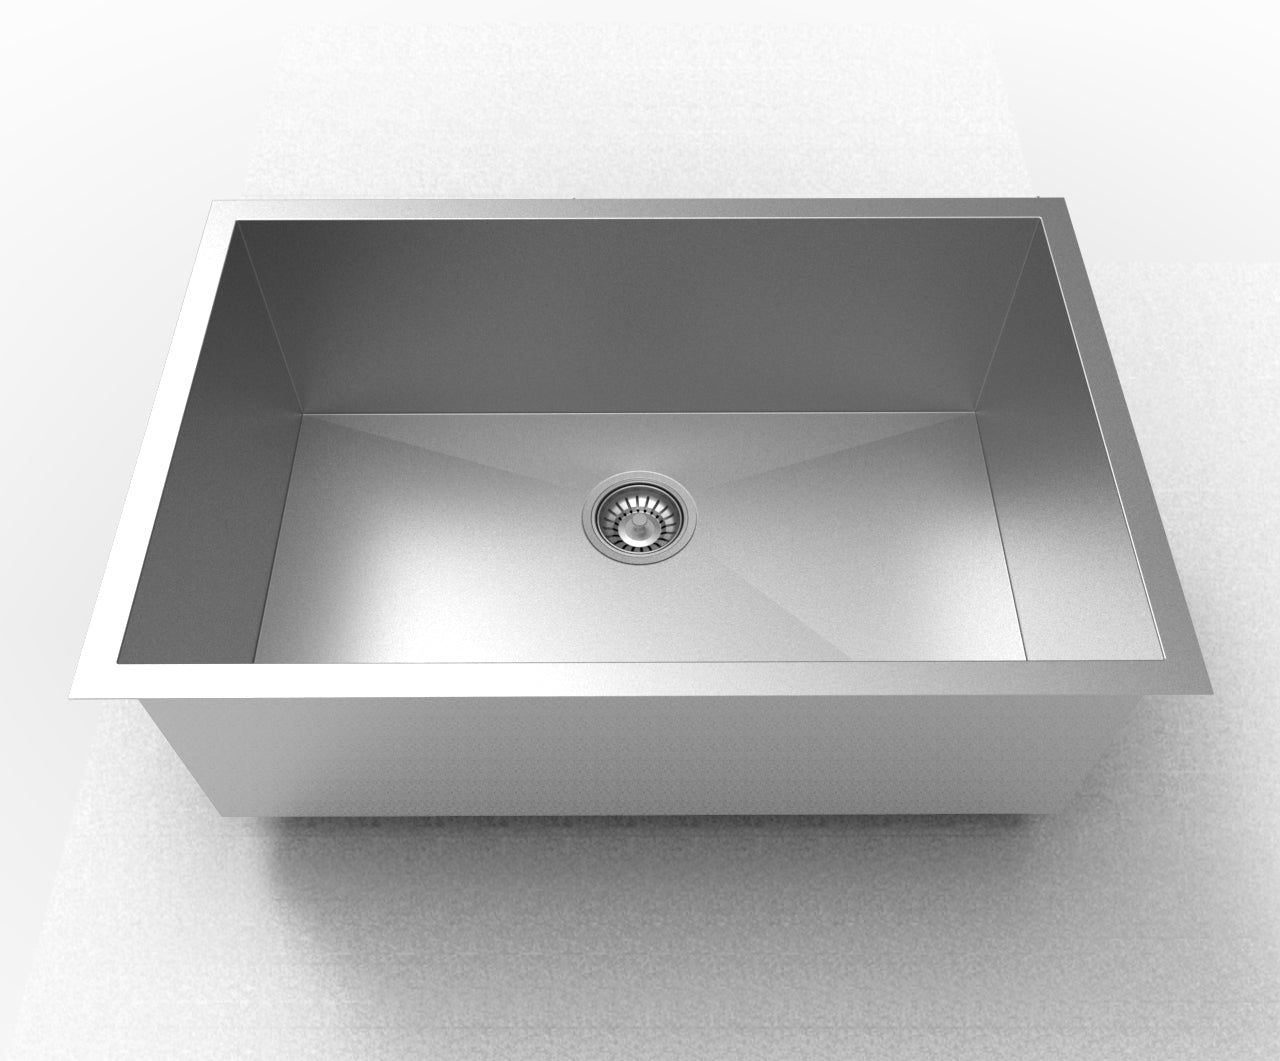 DAX Handmade Single Bowl Undermount Kitchen Sink 28 x 18 - R0 - 16G.  Accessories Included